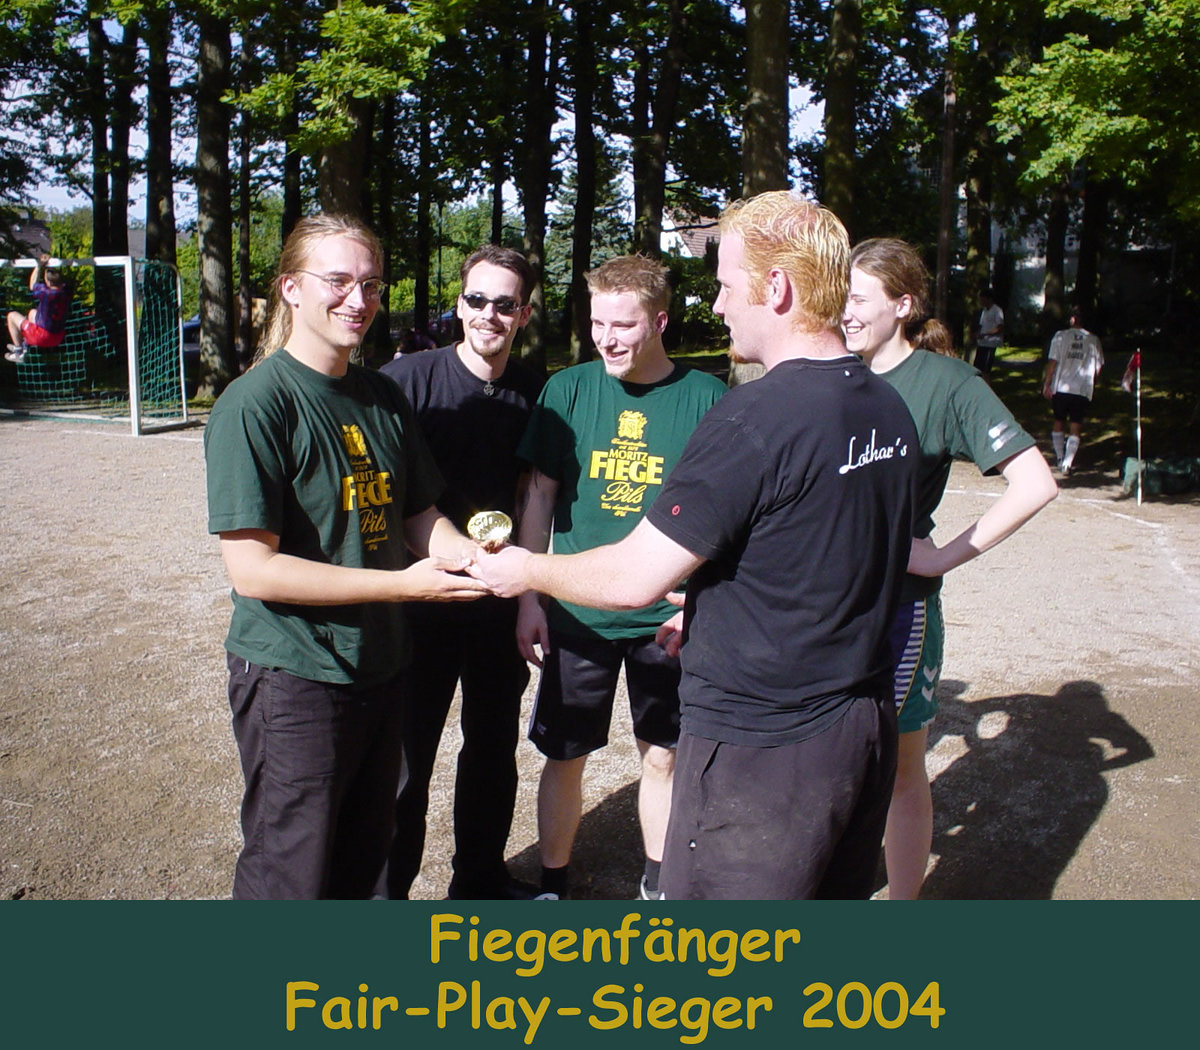 Its cup 2004   fair play sieger   fiegenf%c3%a4nger retina